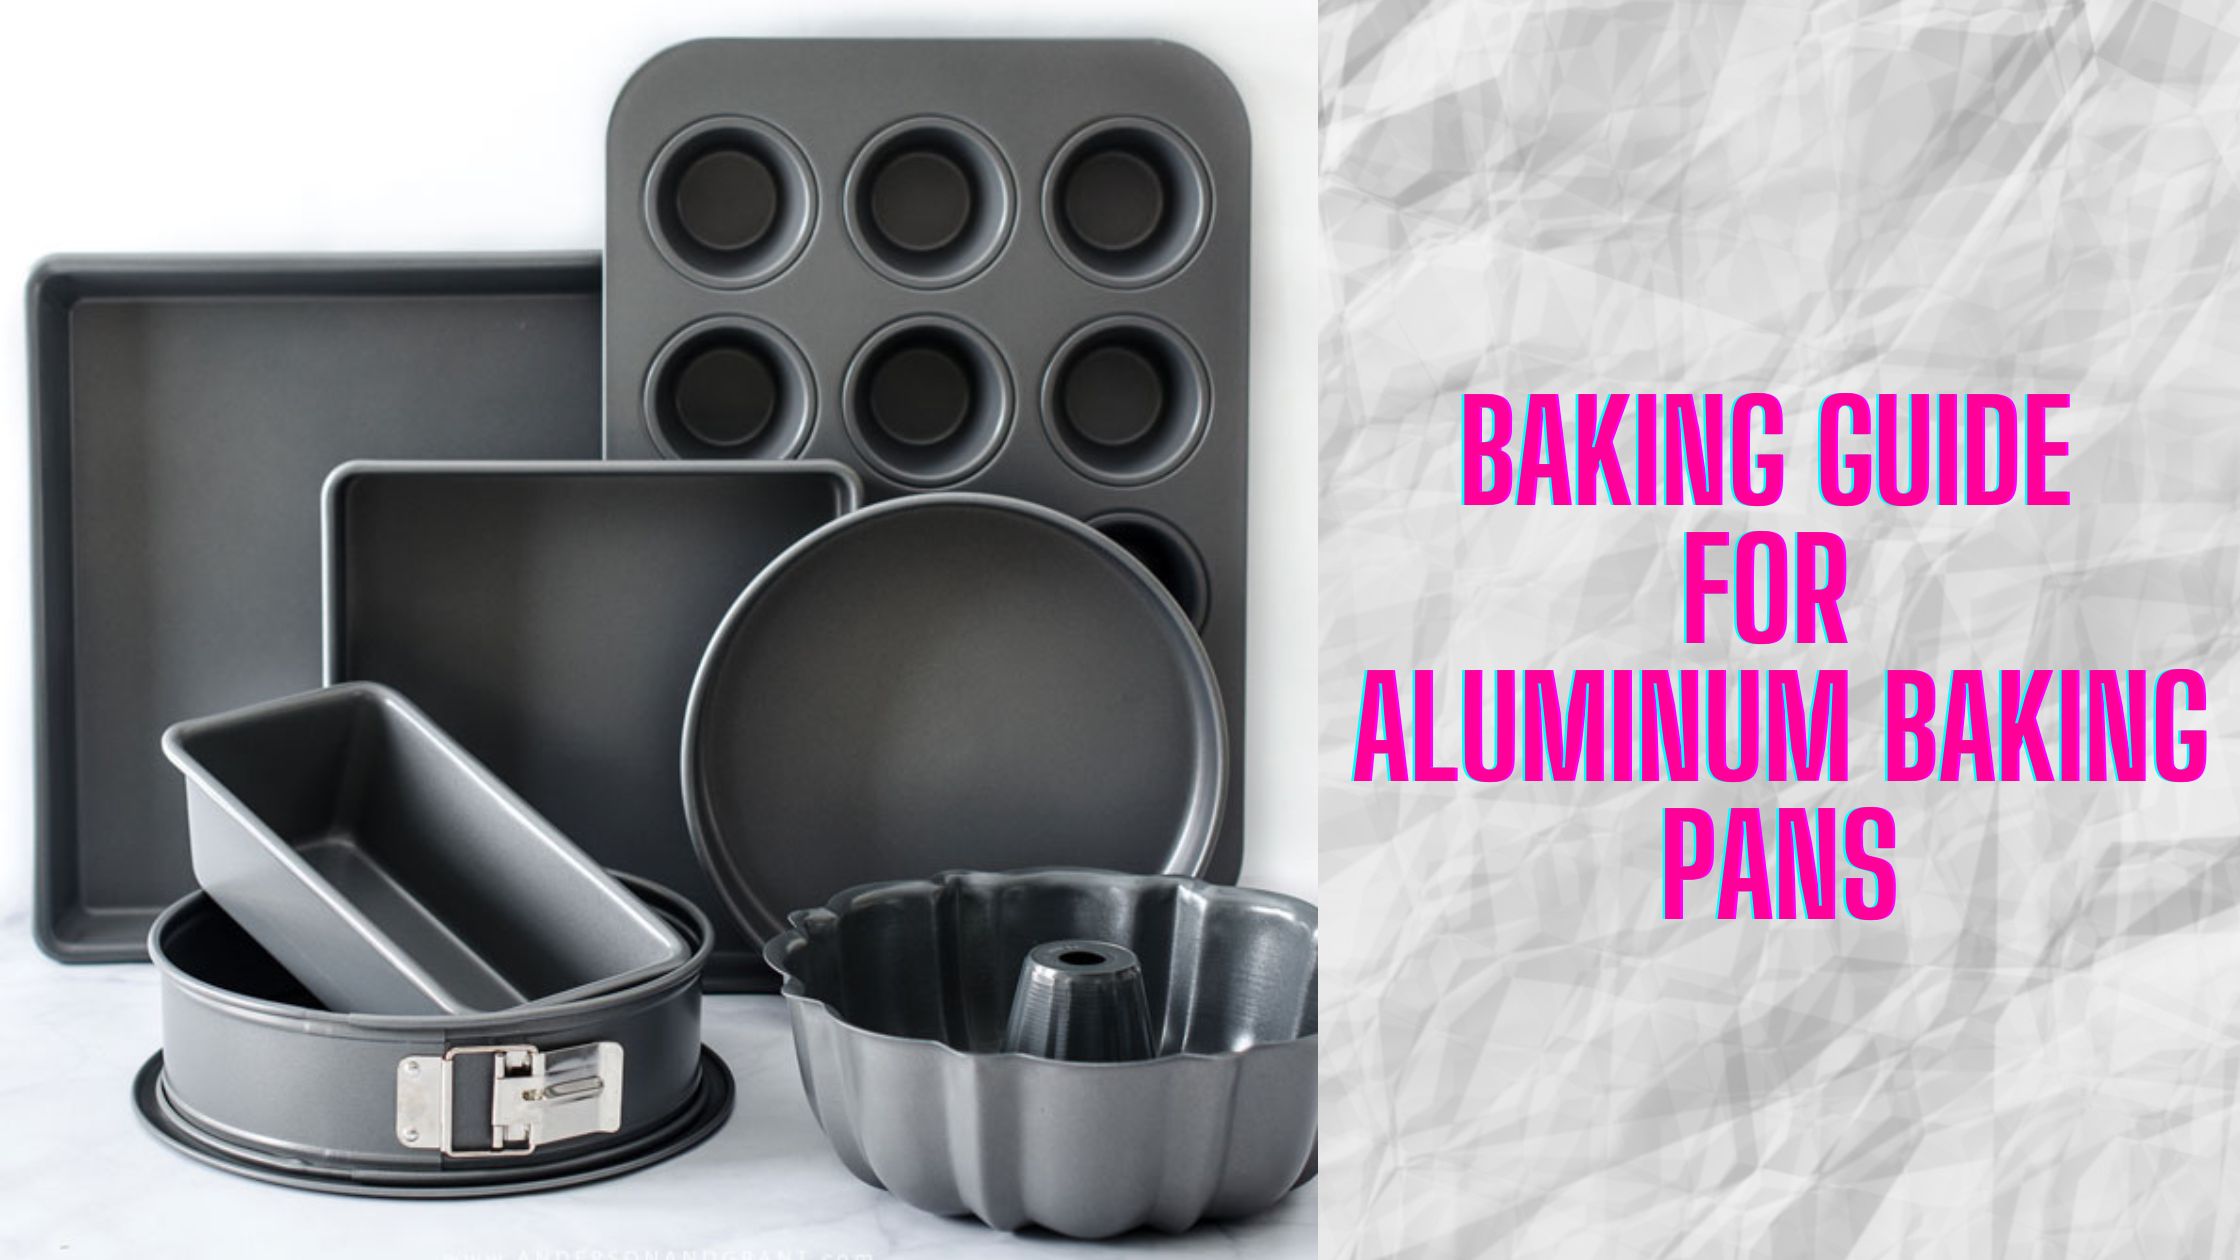 Are Aluminum Baking Pans Non-Stick